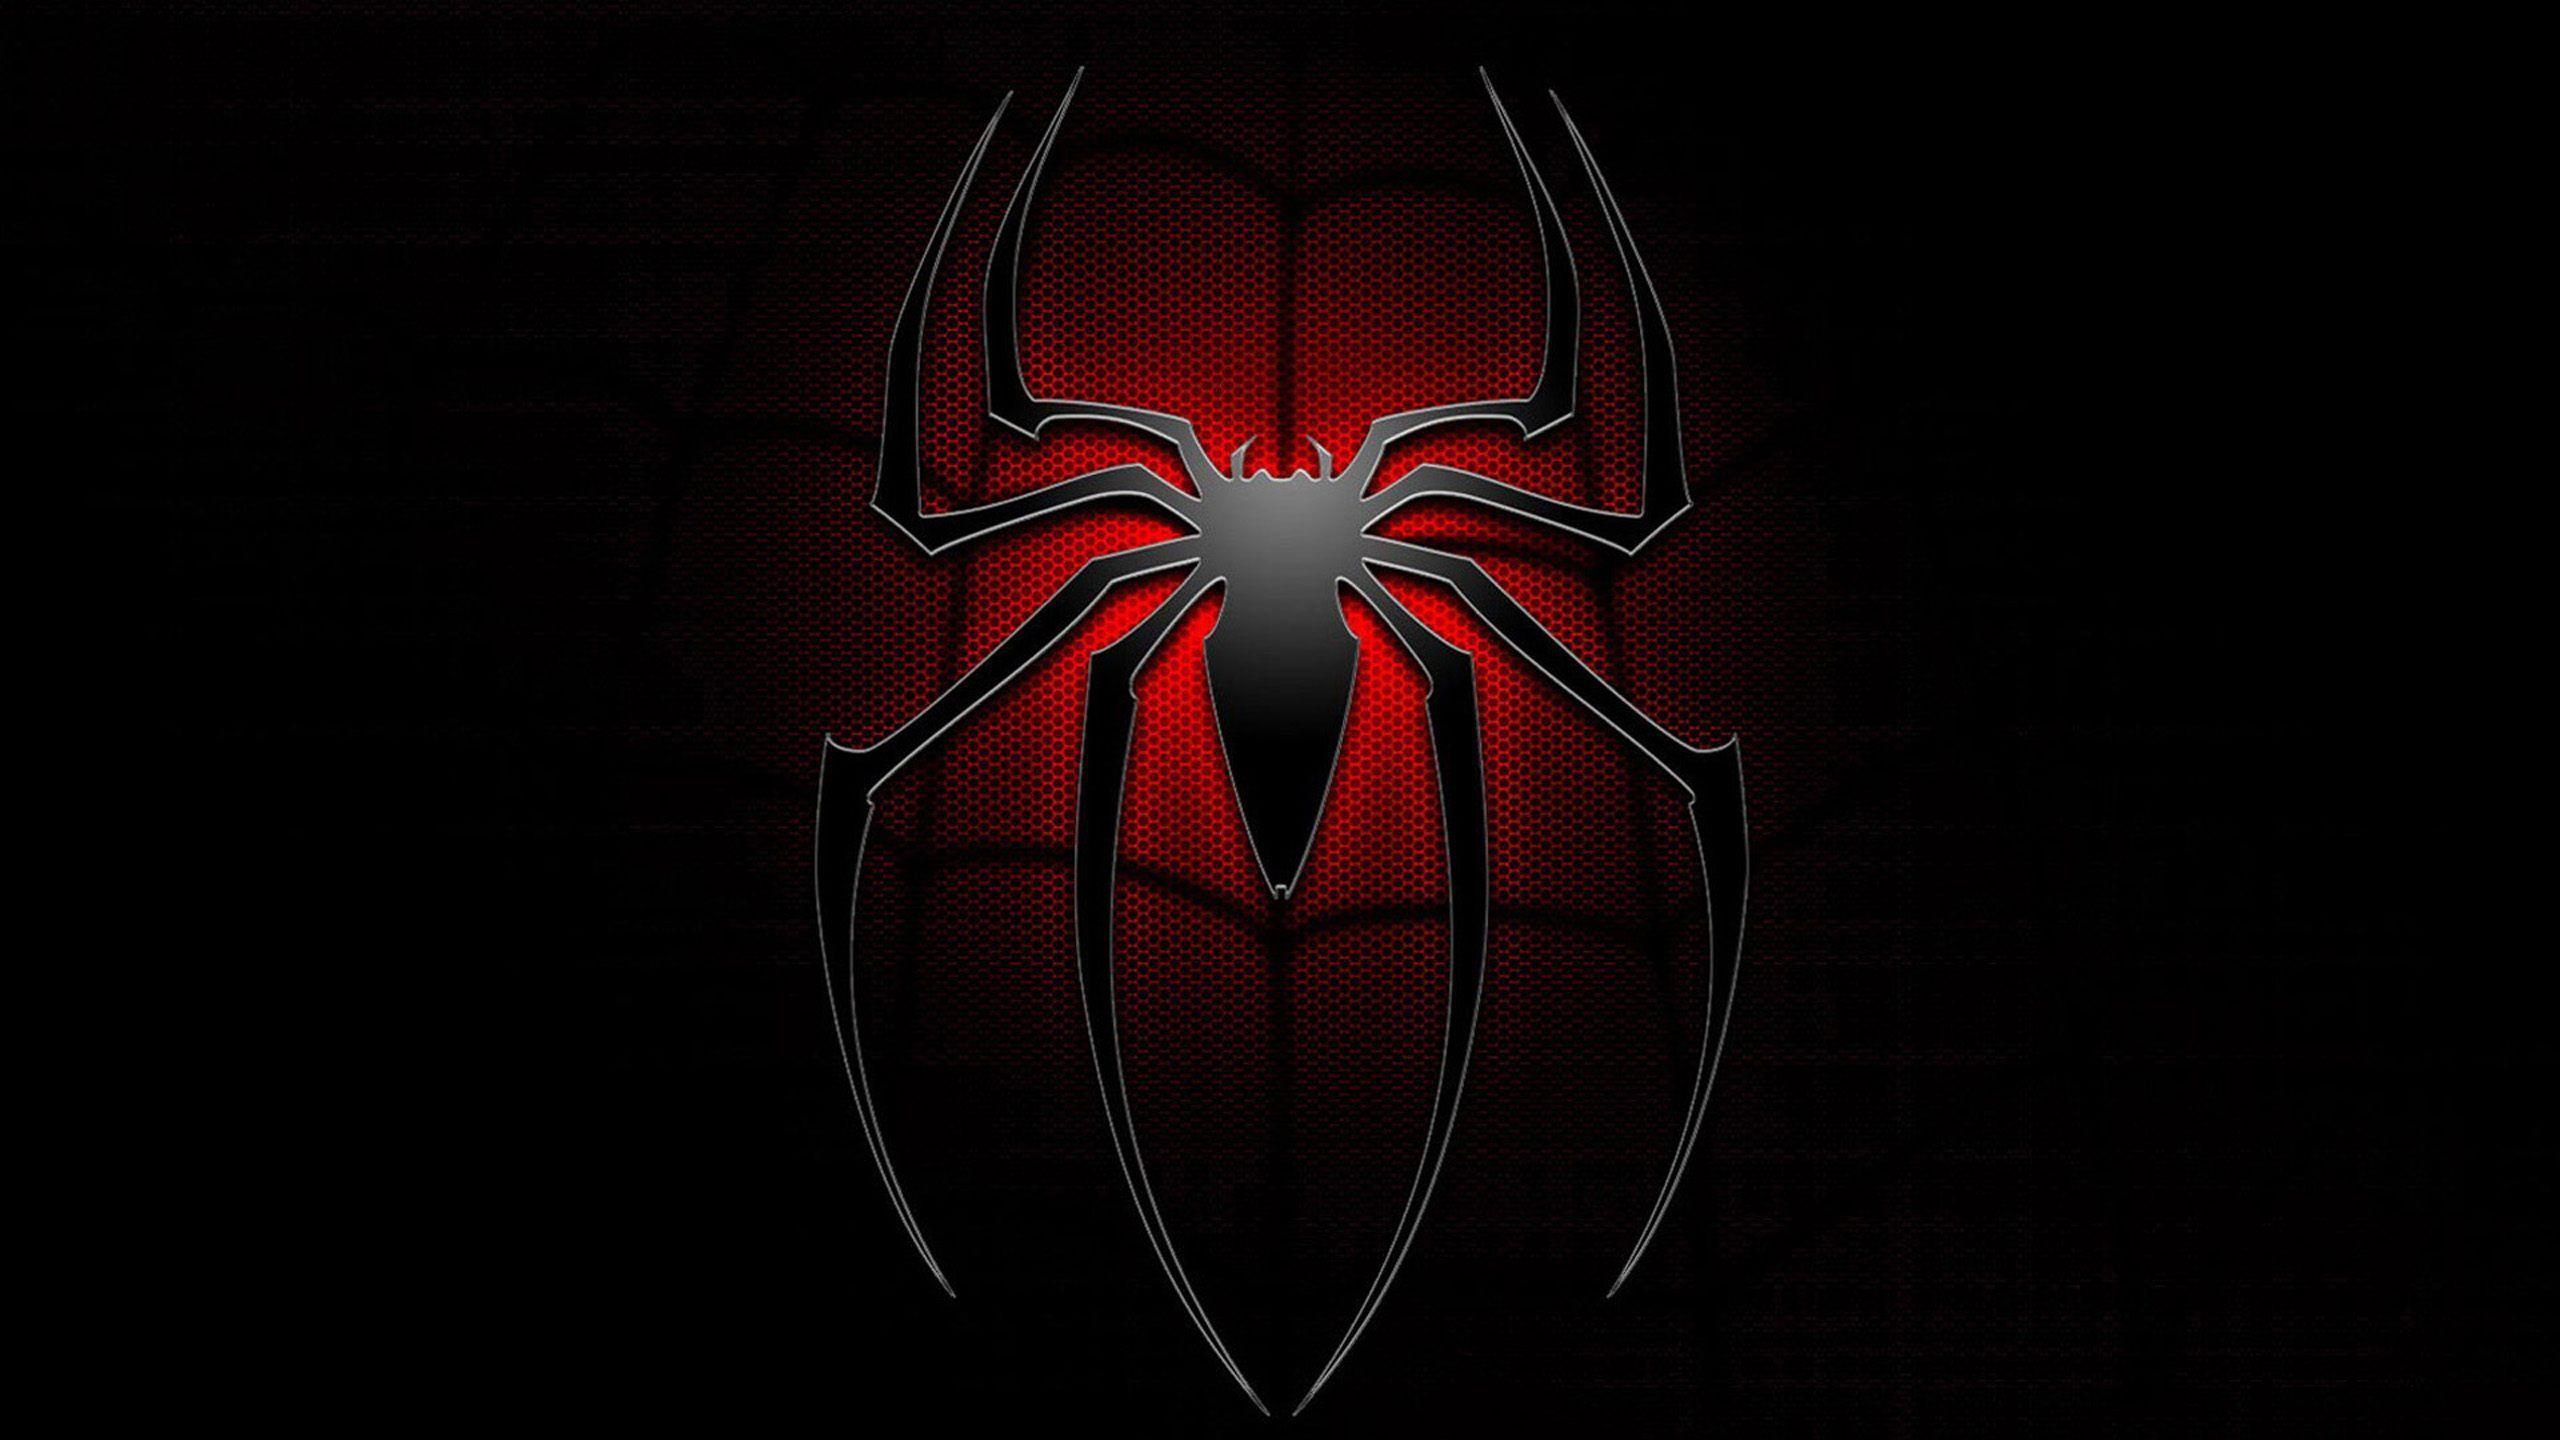 Spiderman Logo Background Wallpaper HD For Desktop. fondos de